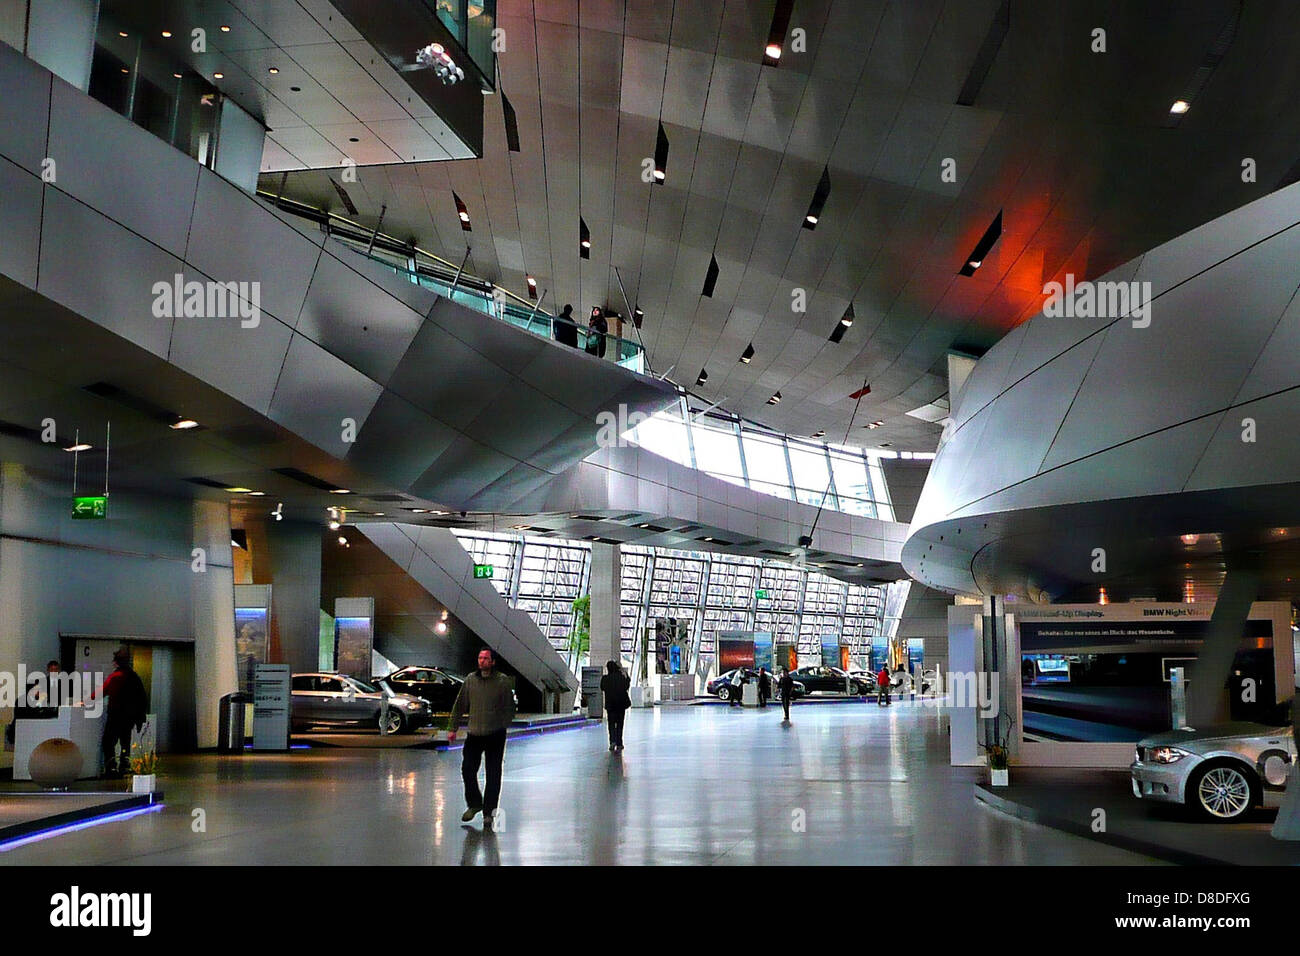 bmw museum interior hyper modern daring architecture Stock Photo